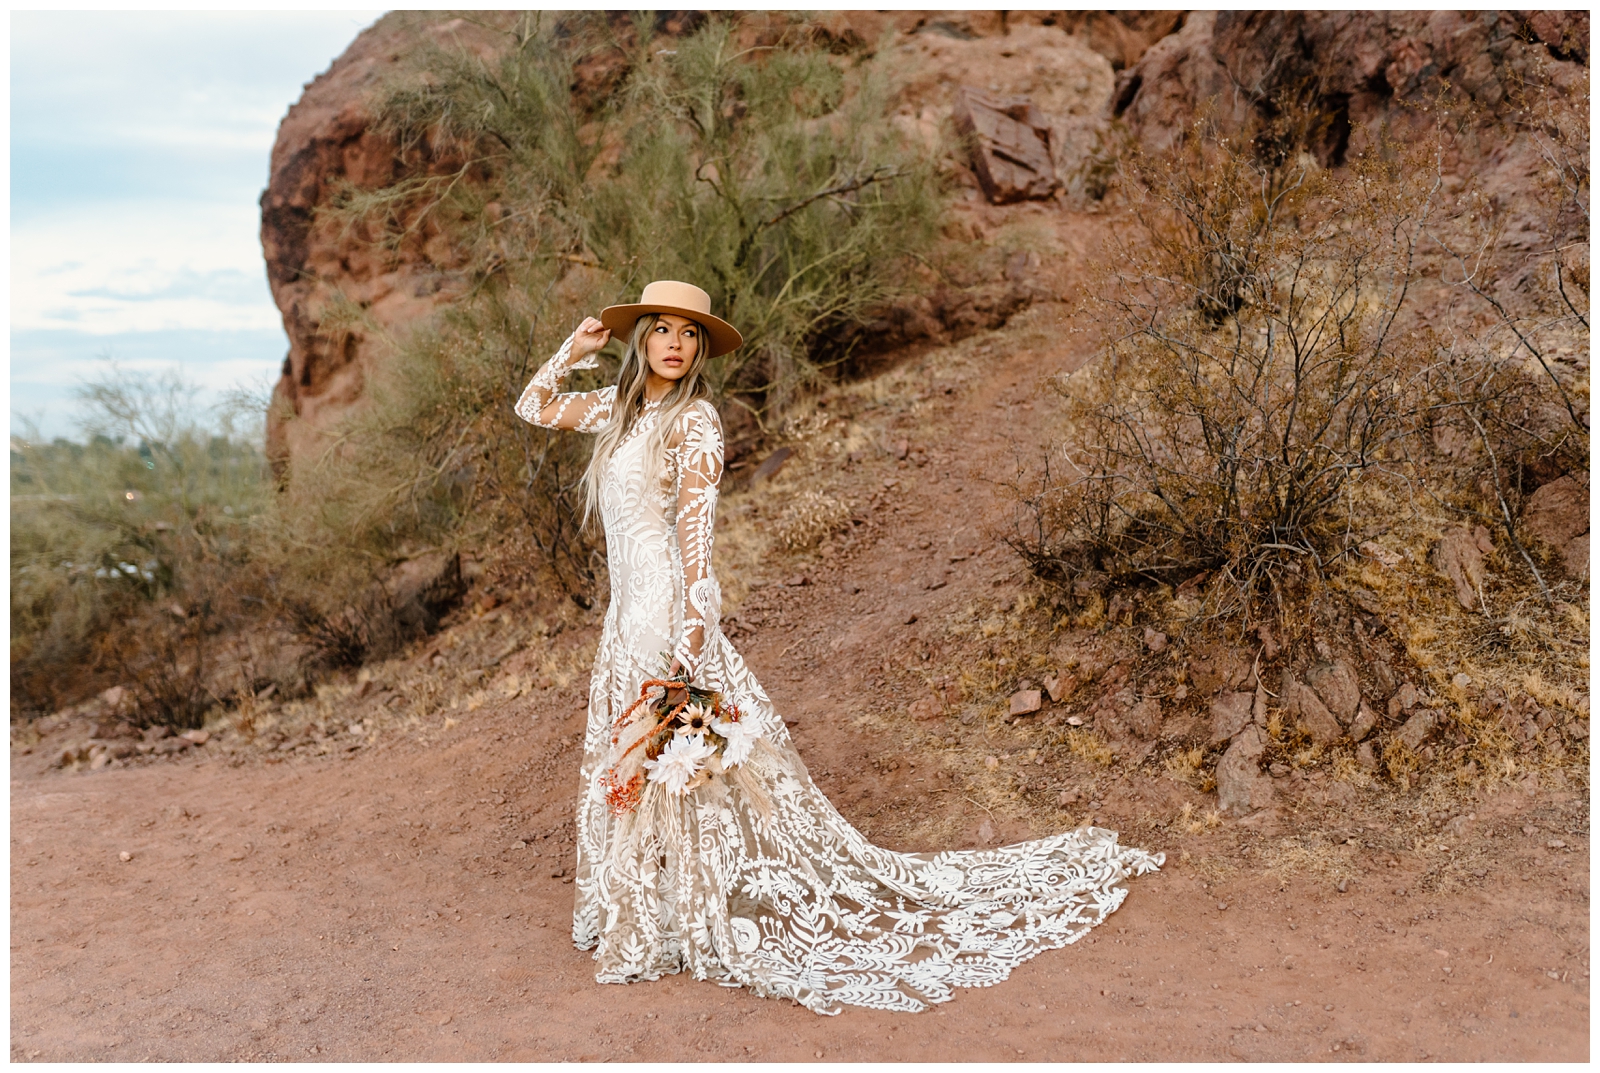 Boho Bride at her adventurous bridal shoot in Phoenix, Arizona